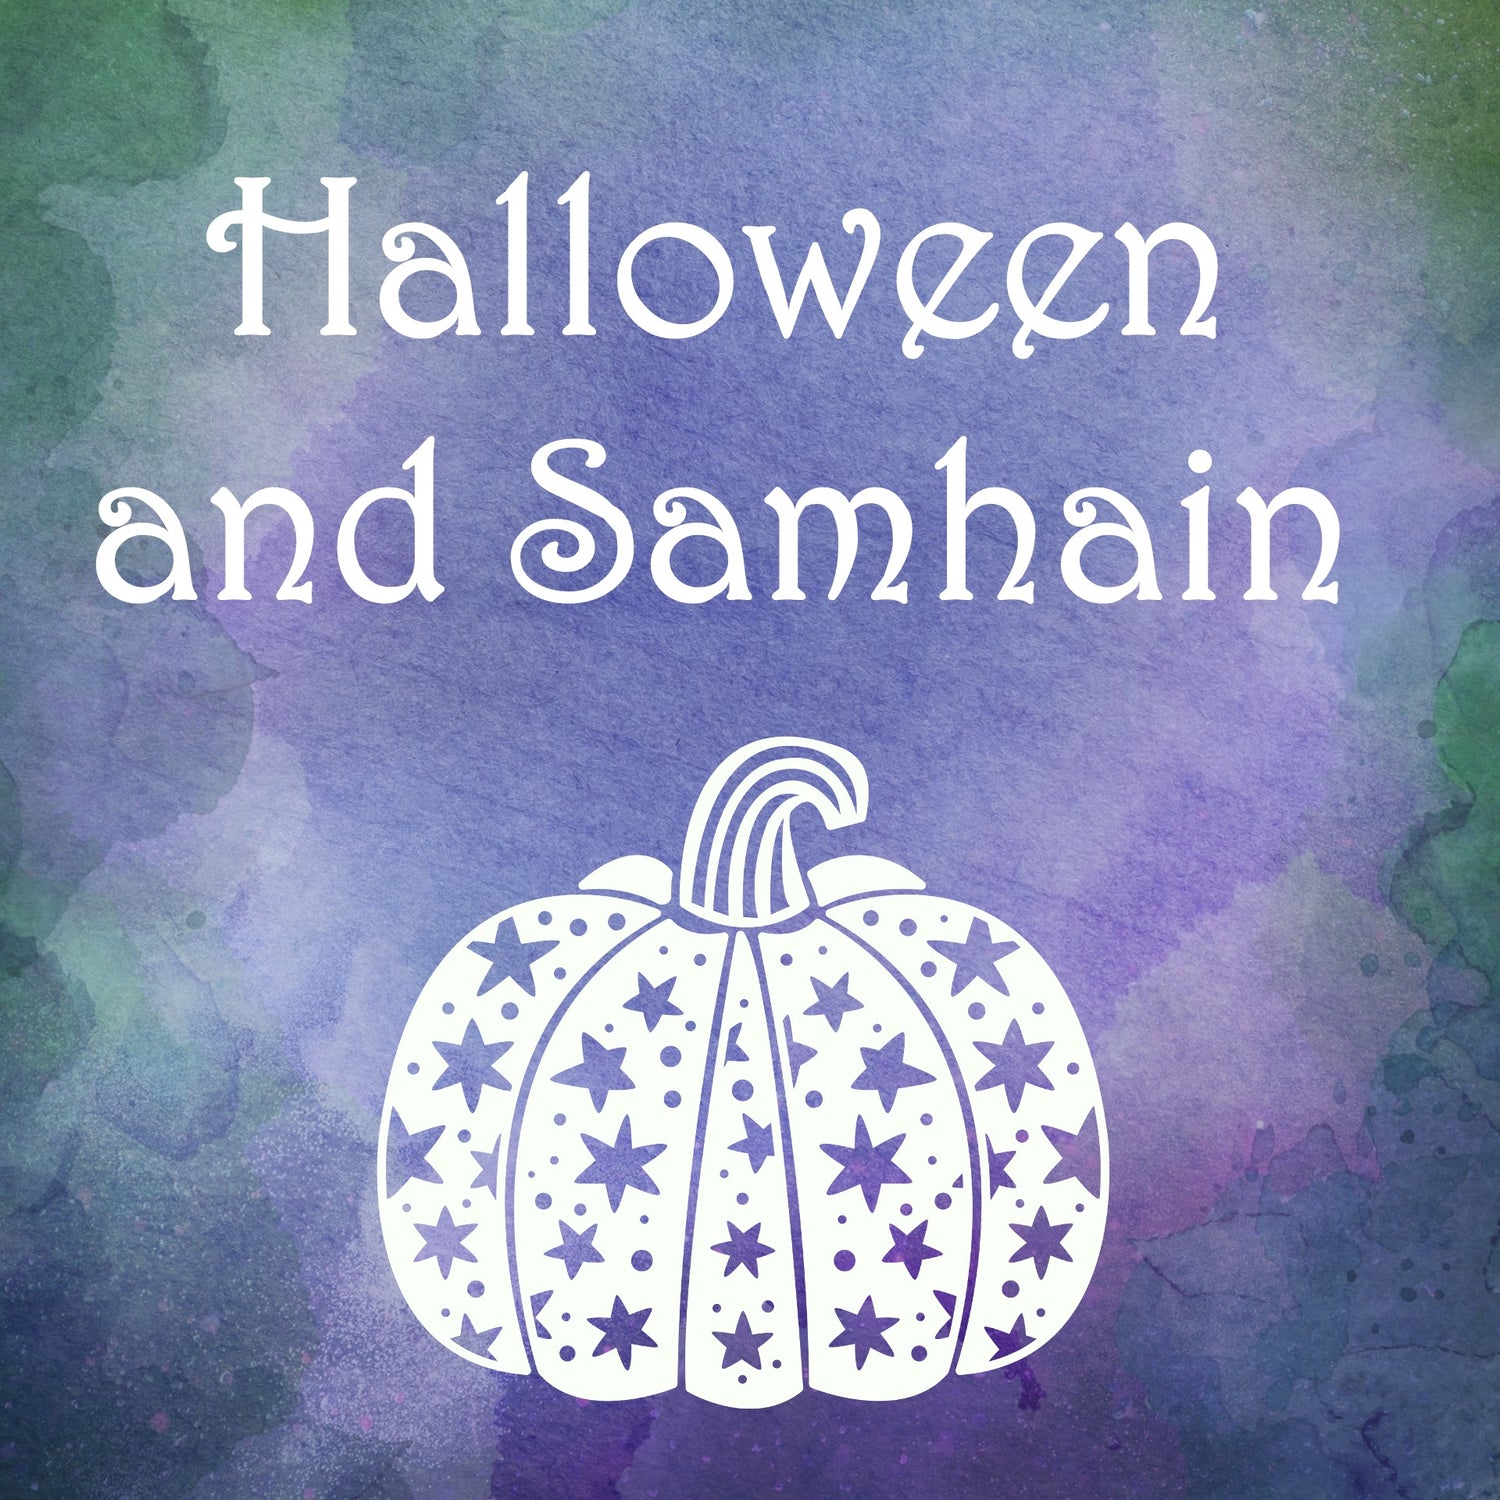 Halloween and Samhain